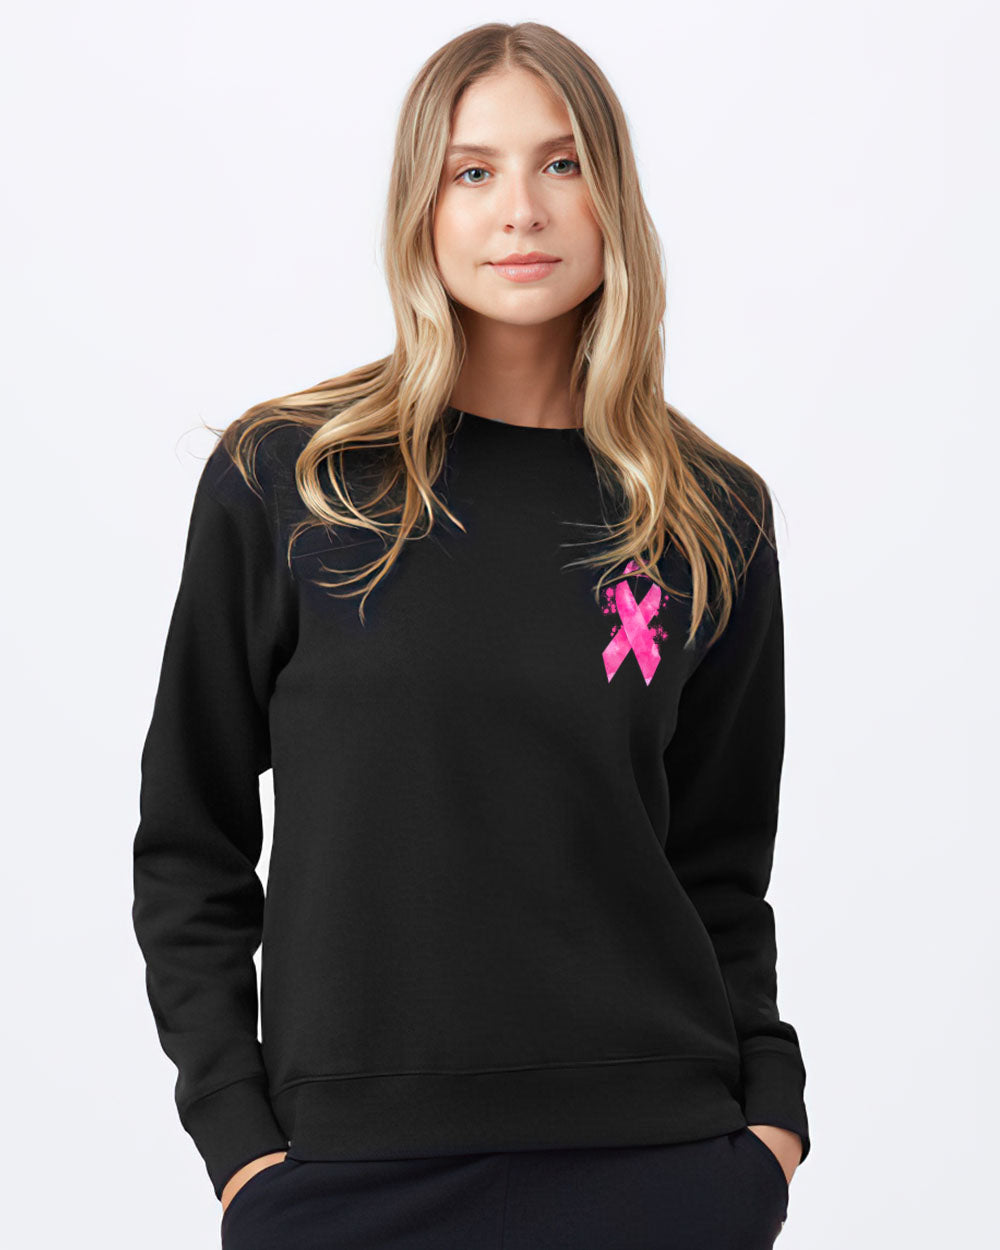 I Am A Breast Cancer Warrior Cross Ribbon Flag Women's Breast Cancer Awareness Sweatshirt